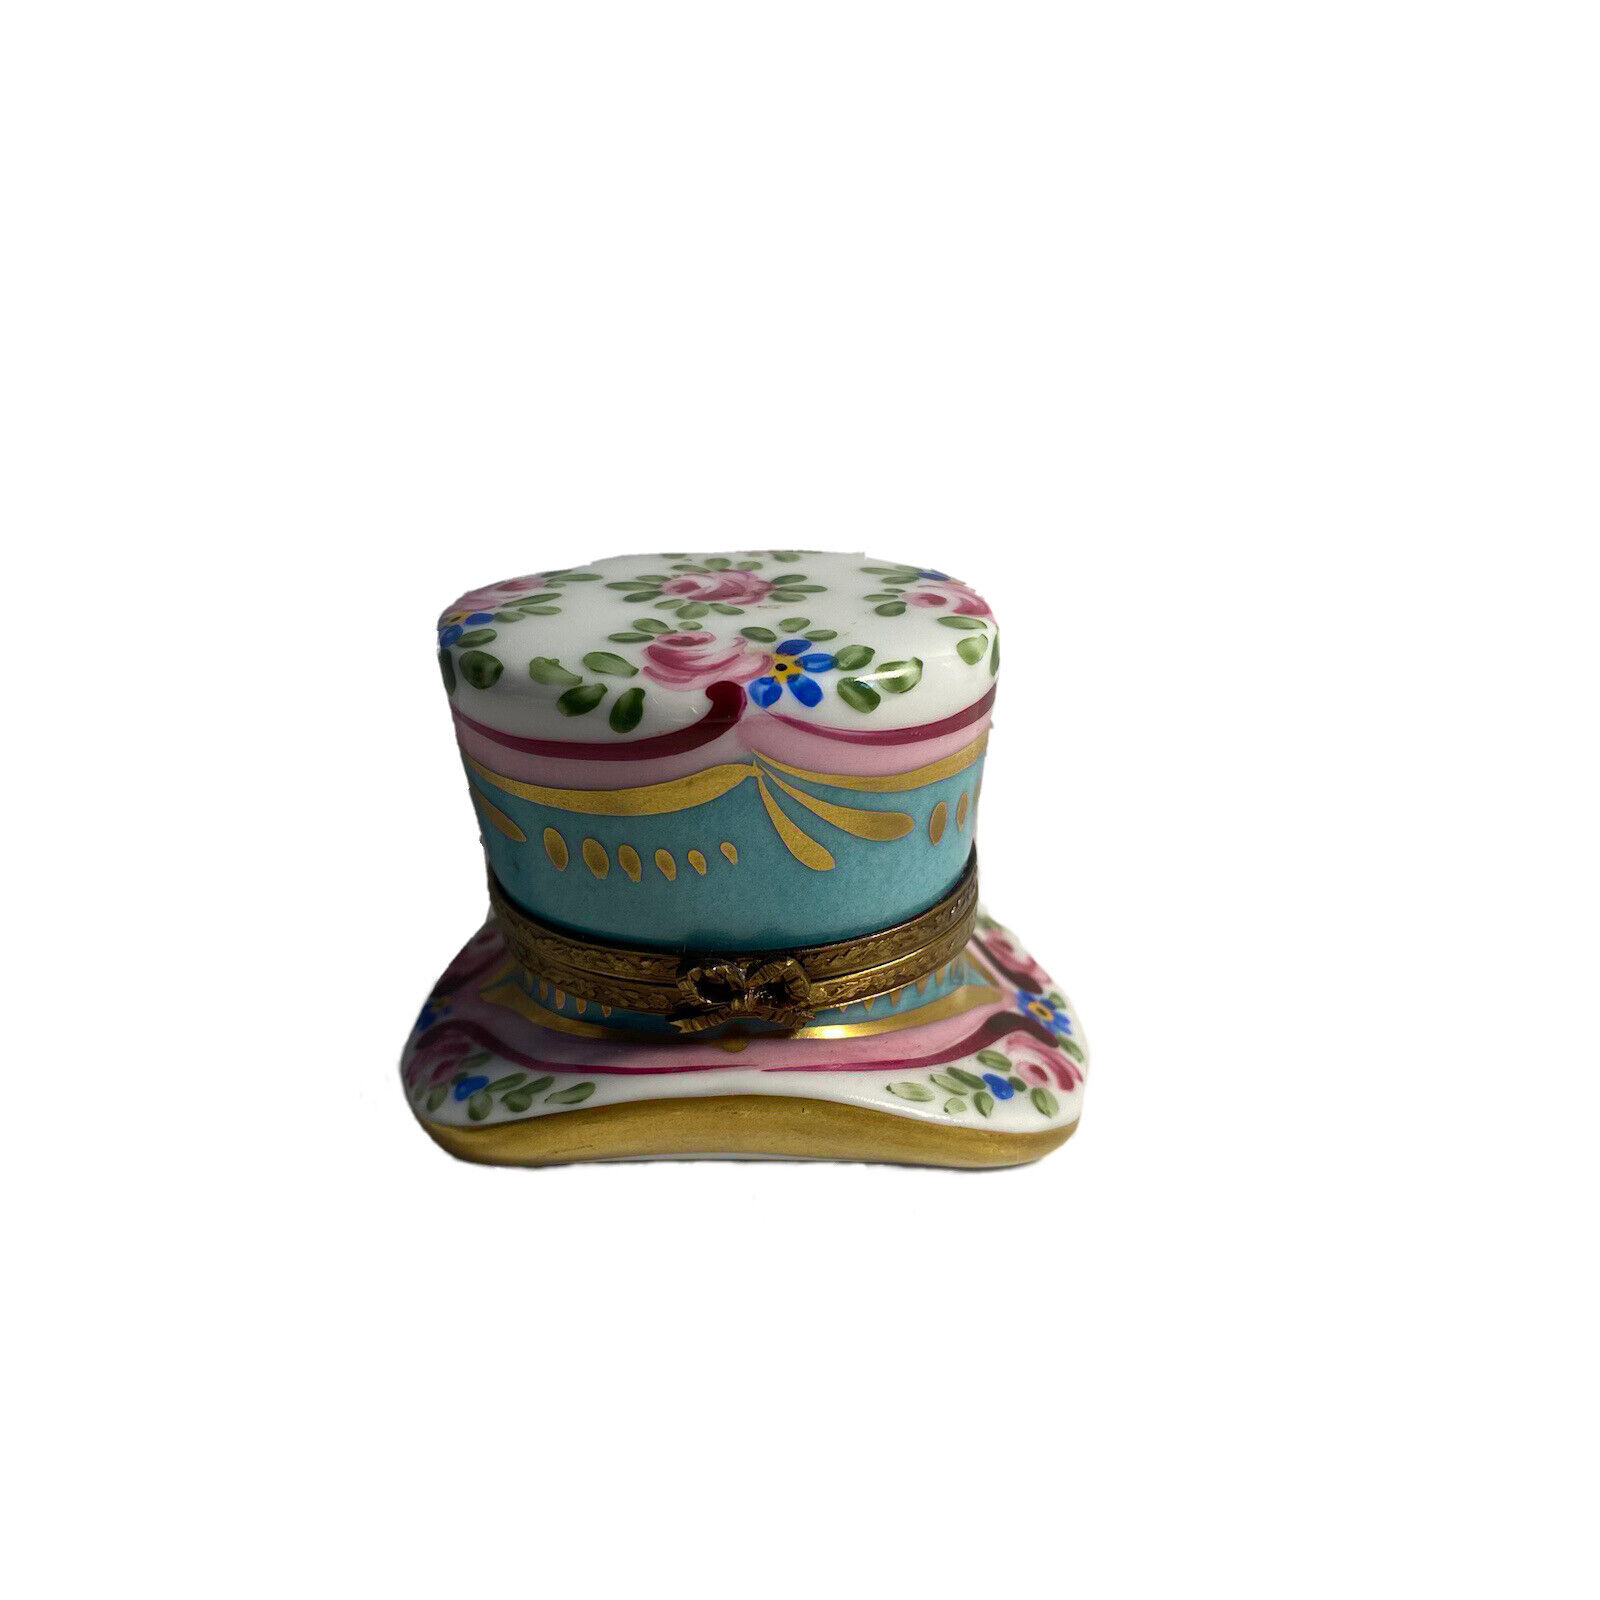 Vintage RARE Limoges France top hat shaped trinket box with perfume bottle